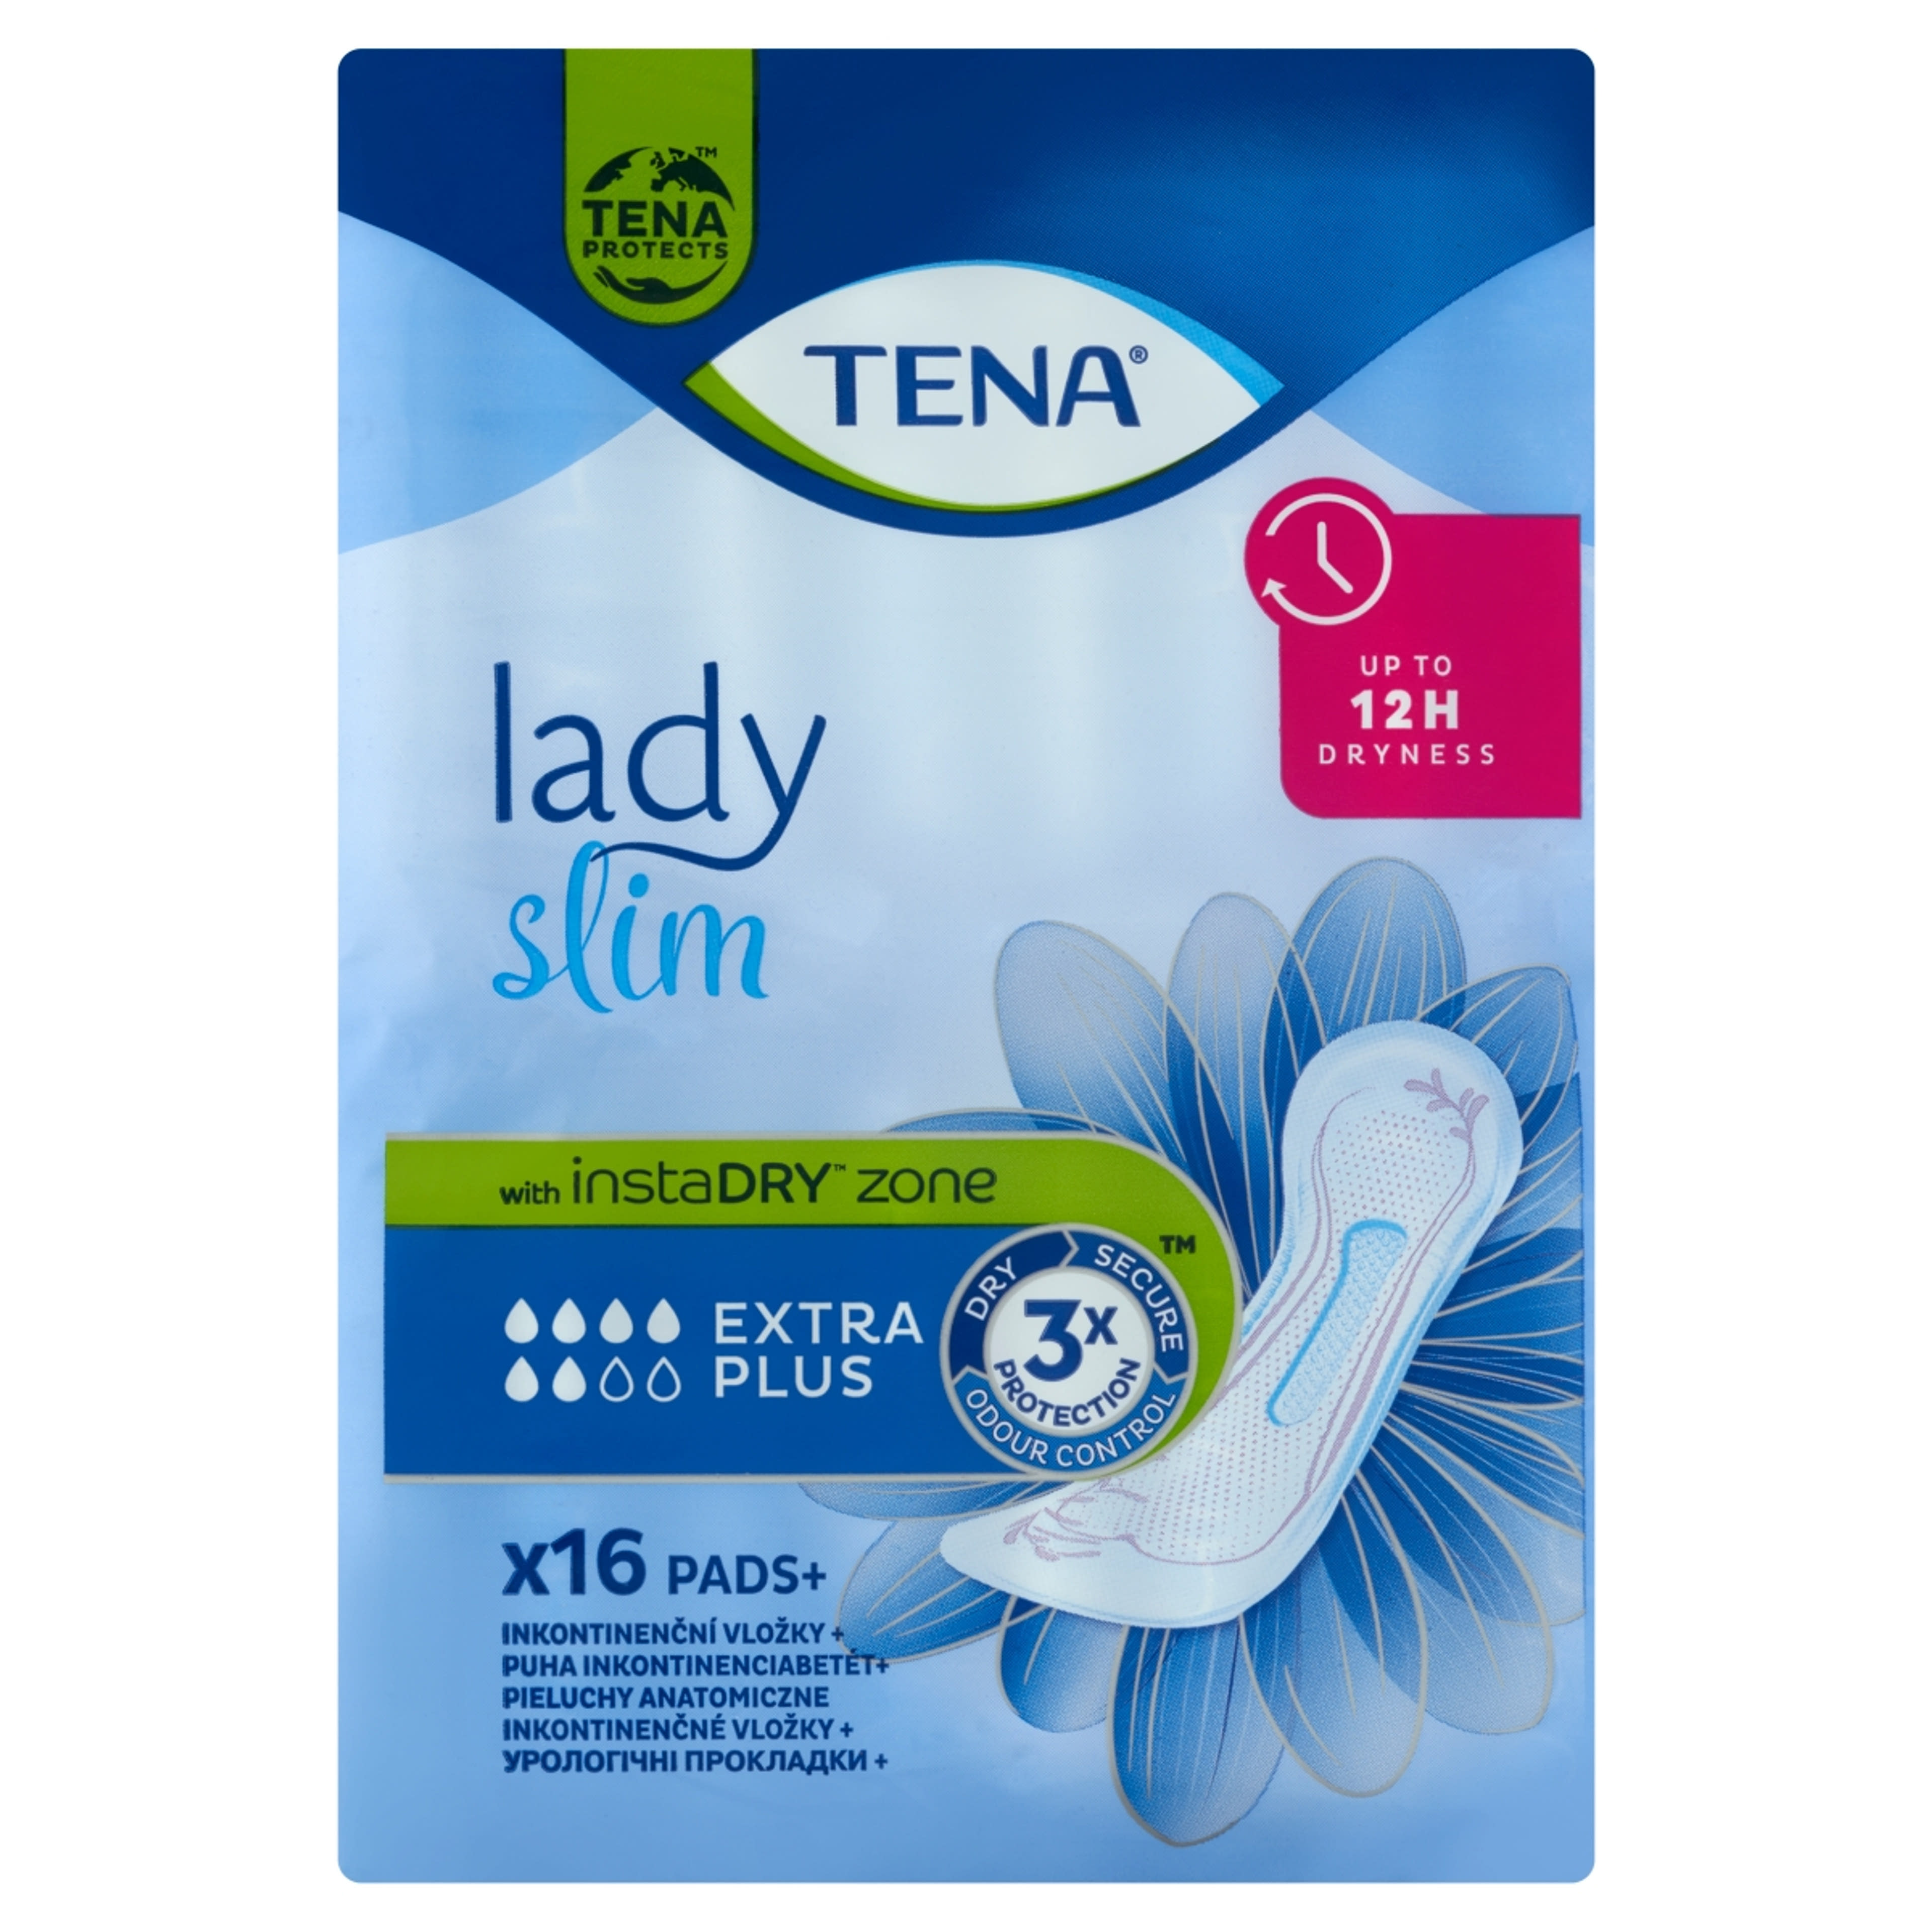 Tena Lady inkontinencia betét extra plus - 16 db-1